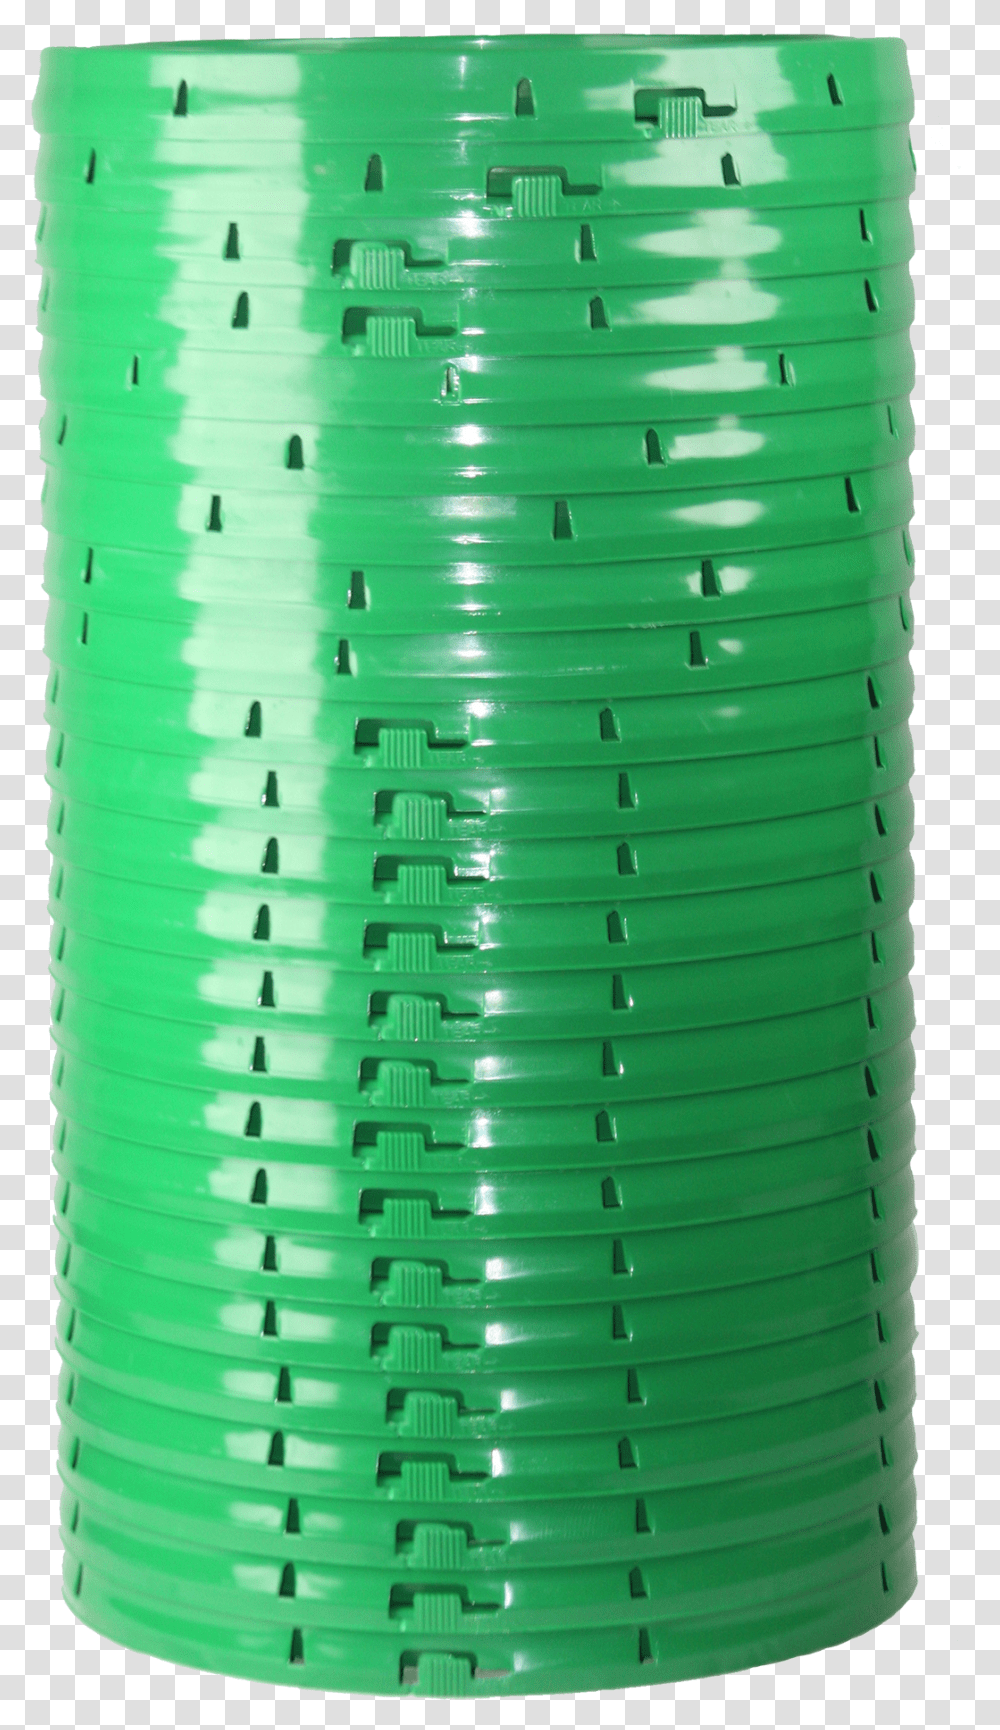 Green Plastic Lid With Gasket And Tear Tab Fits Plastic, Bottle, Rug, Basket, Water Bottle Transparent Png